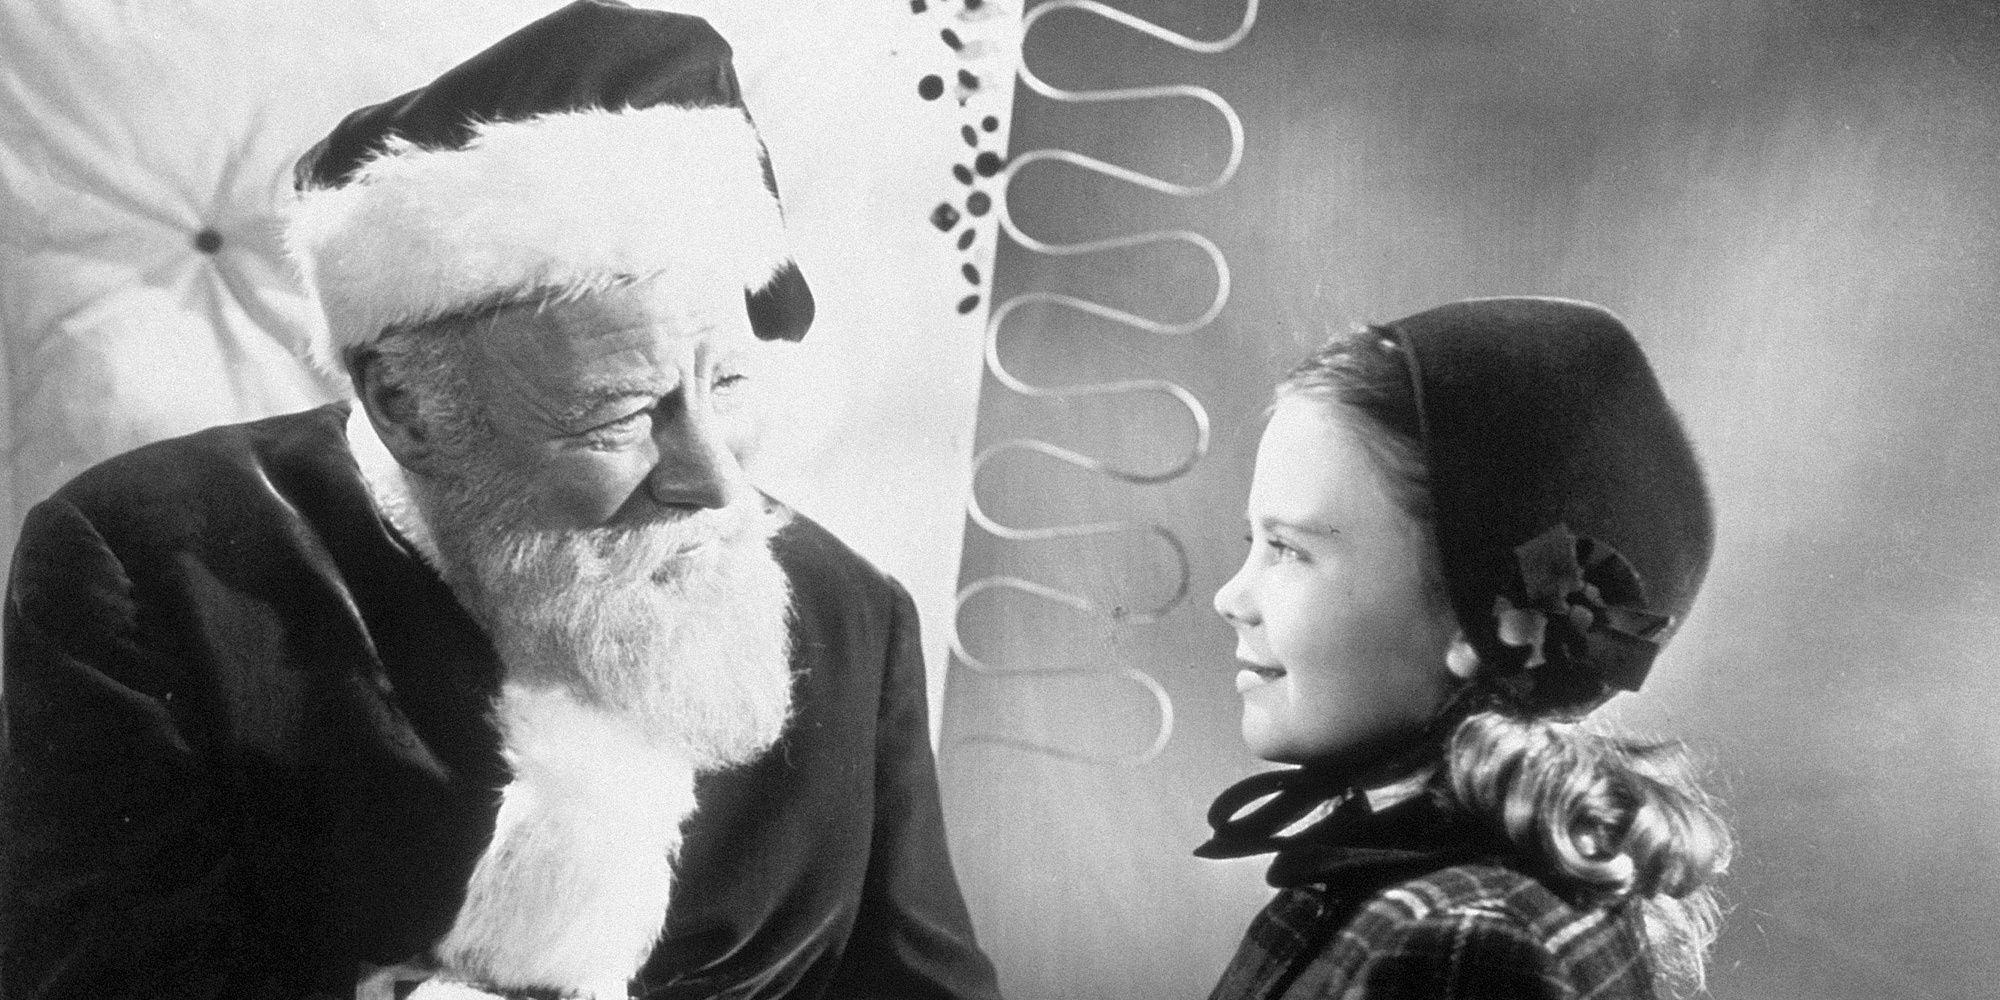 Edmund Gwen plays Santa in Miracle on 34th Street